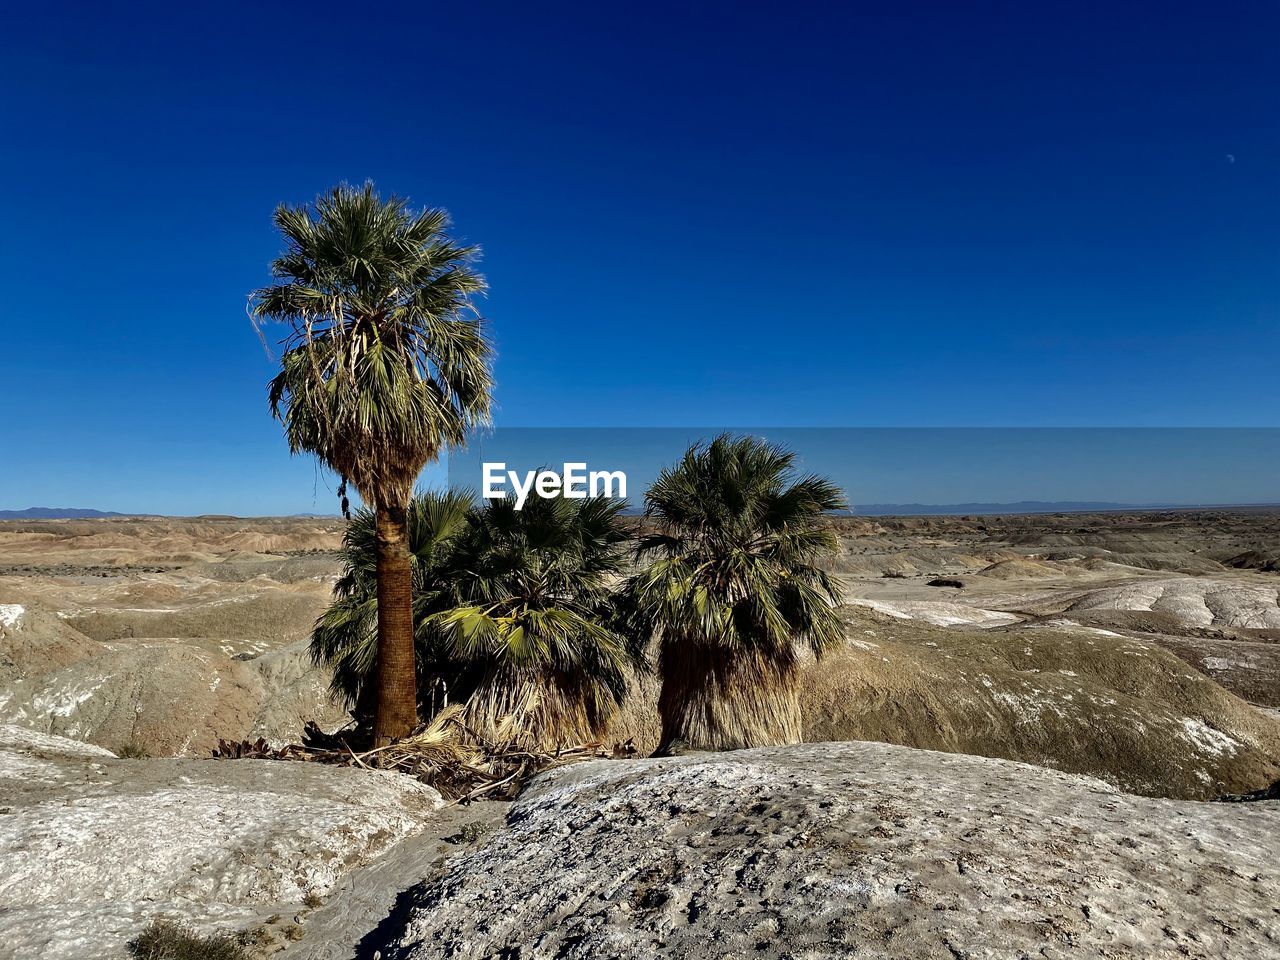 Trees growing in desert against blue sky